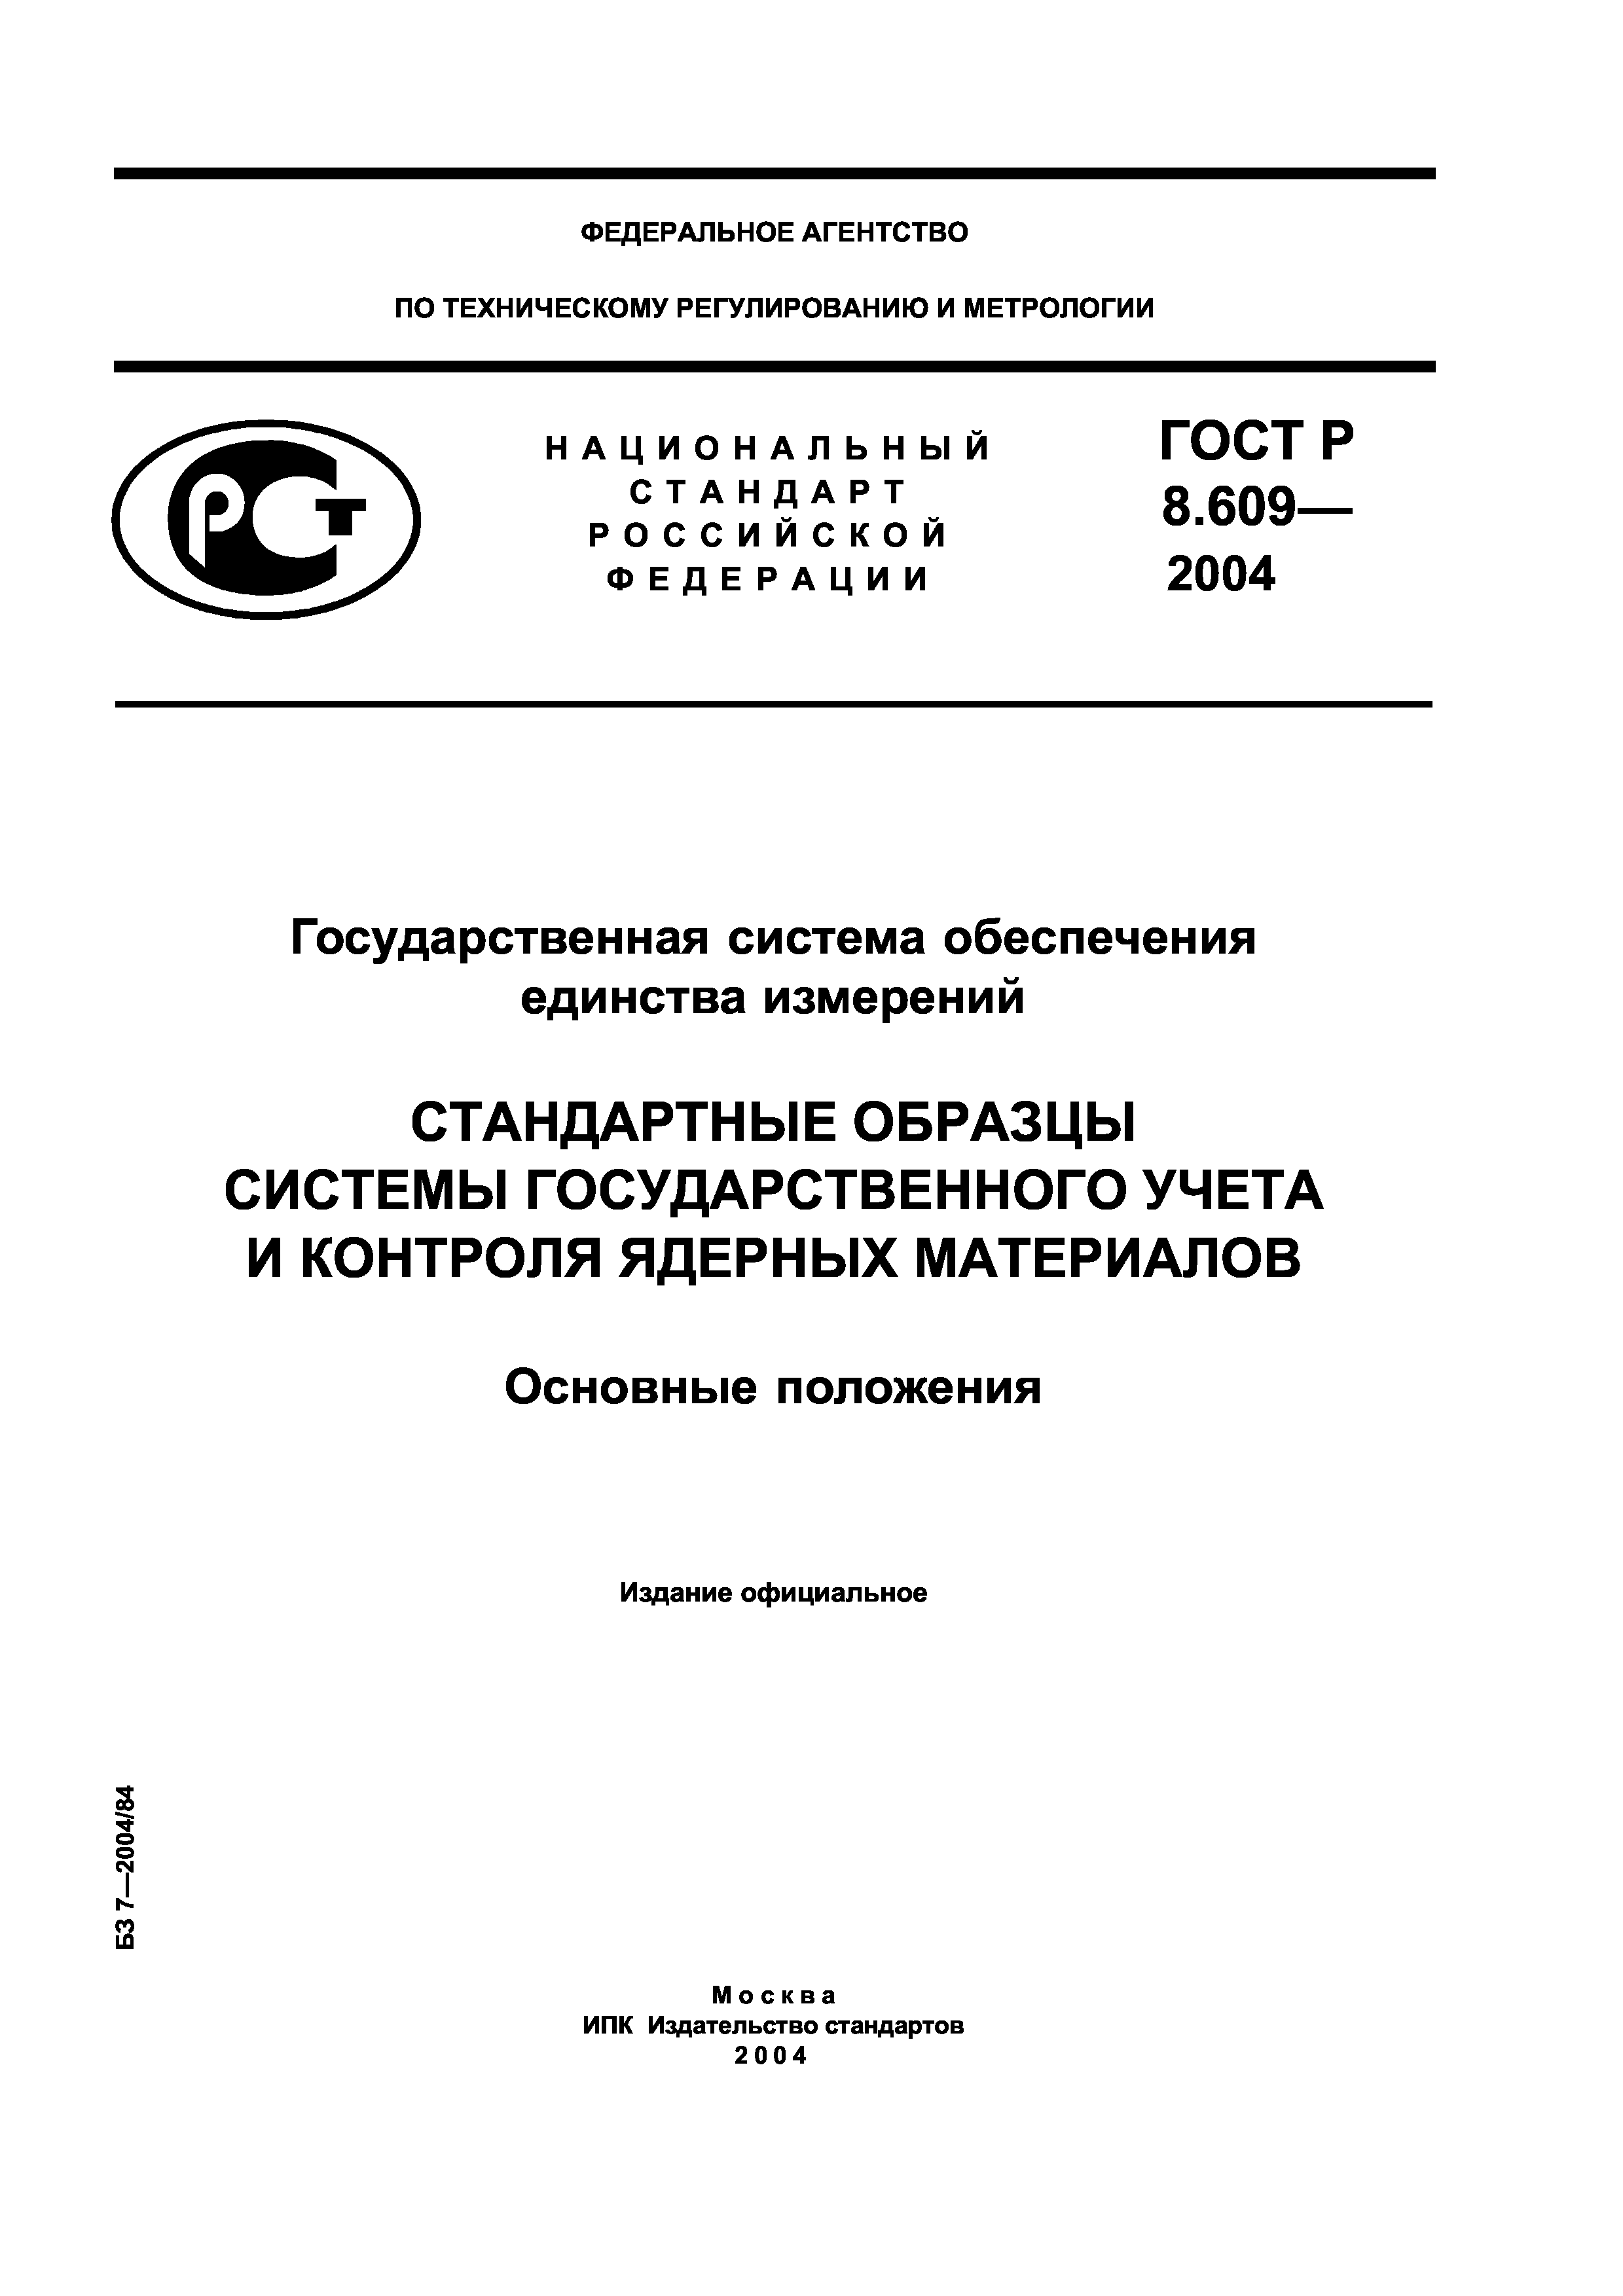 ГОСТ Р 8.609-2004